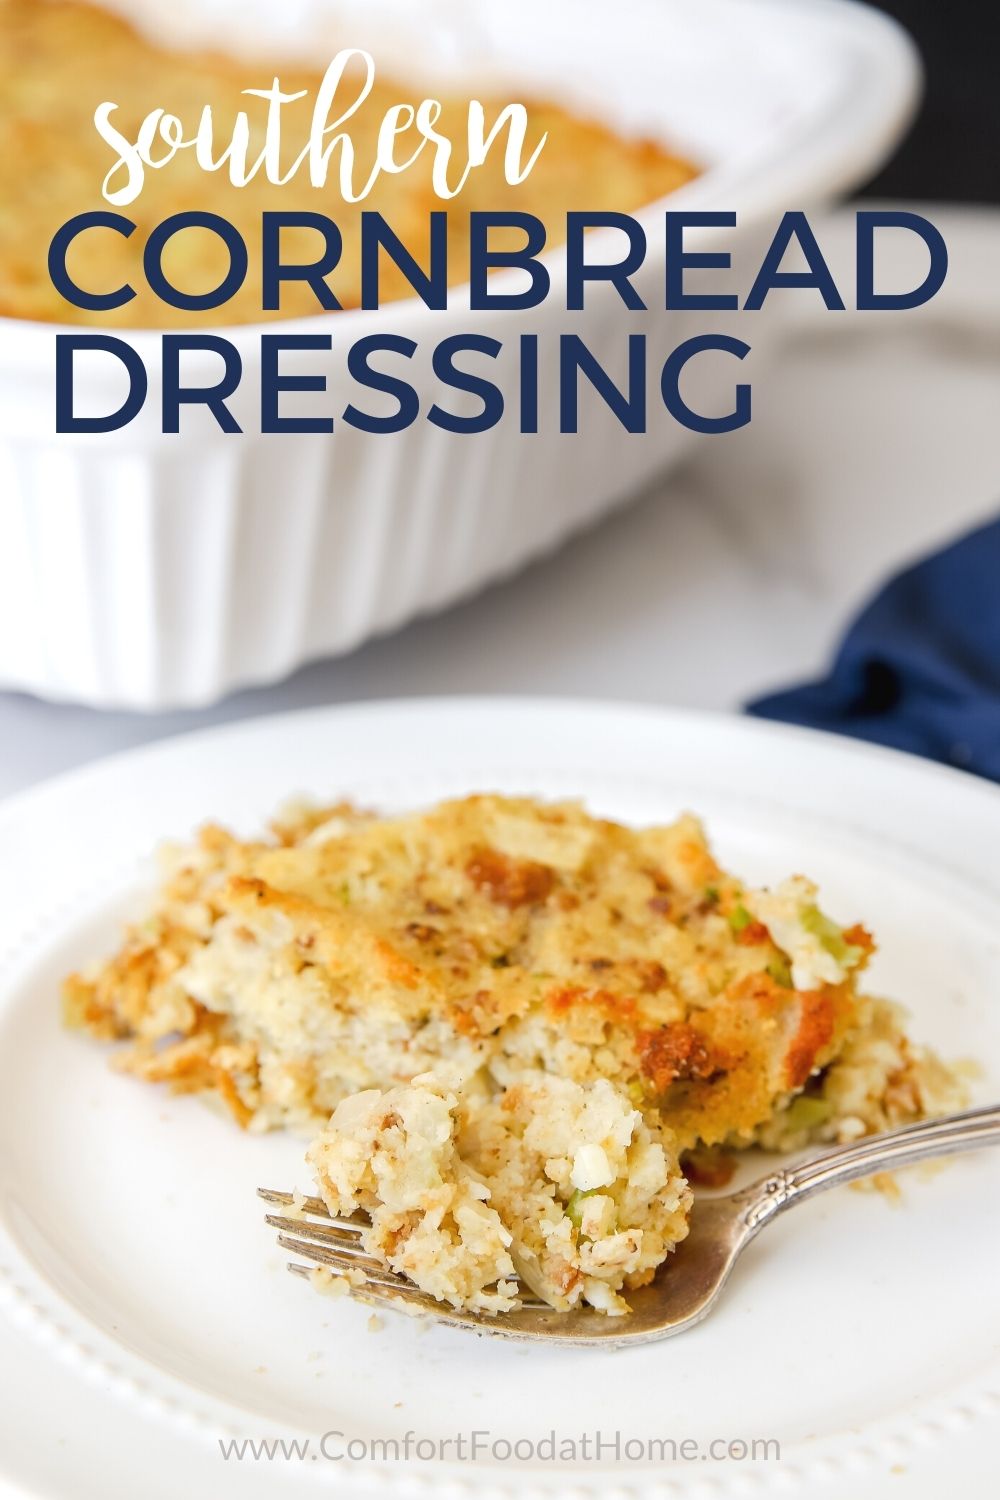 Southern Cornbread Dressing Recipe